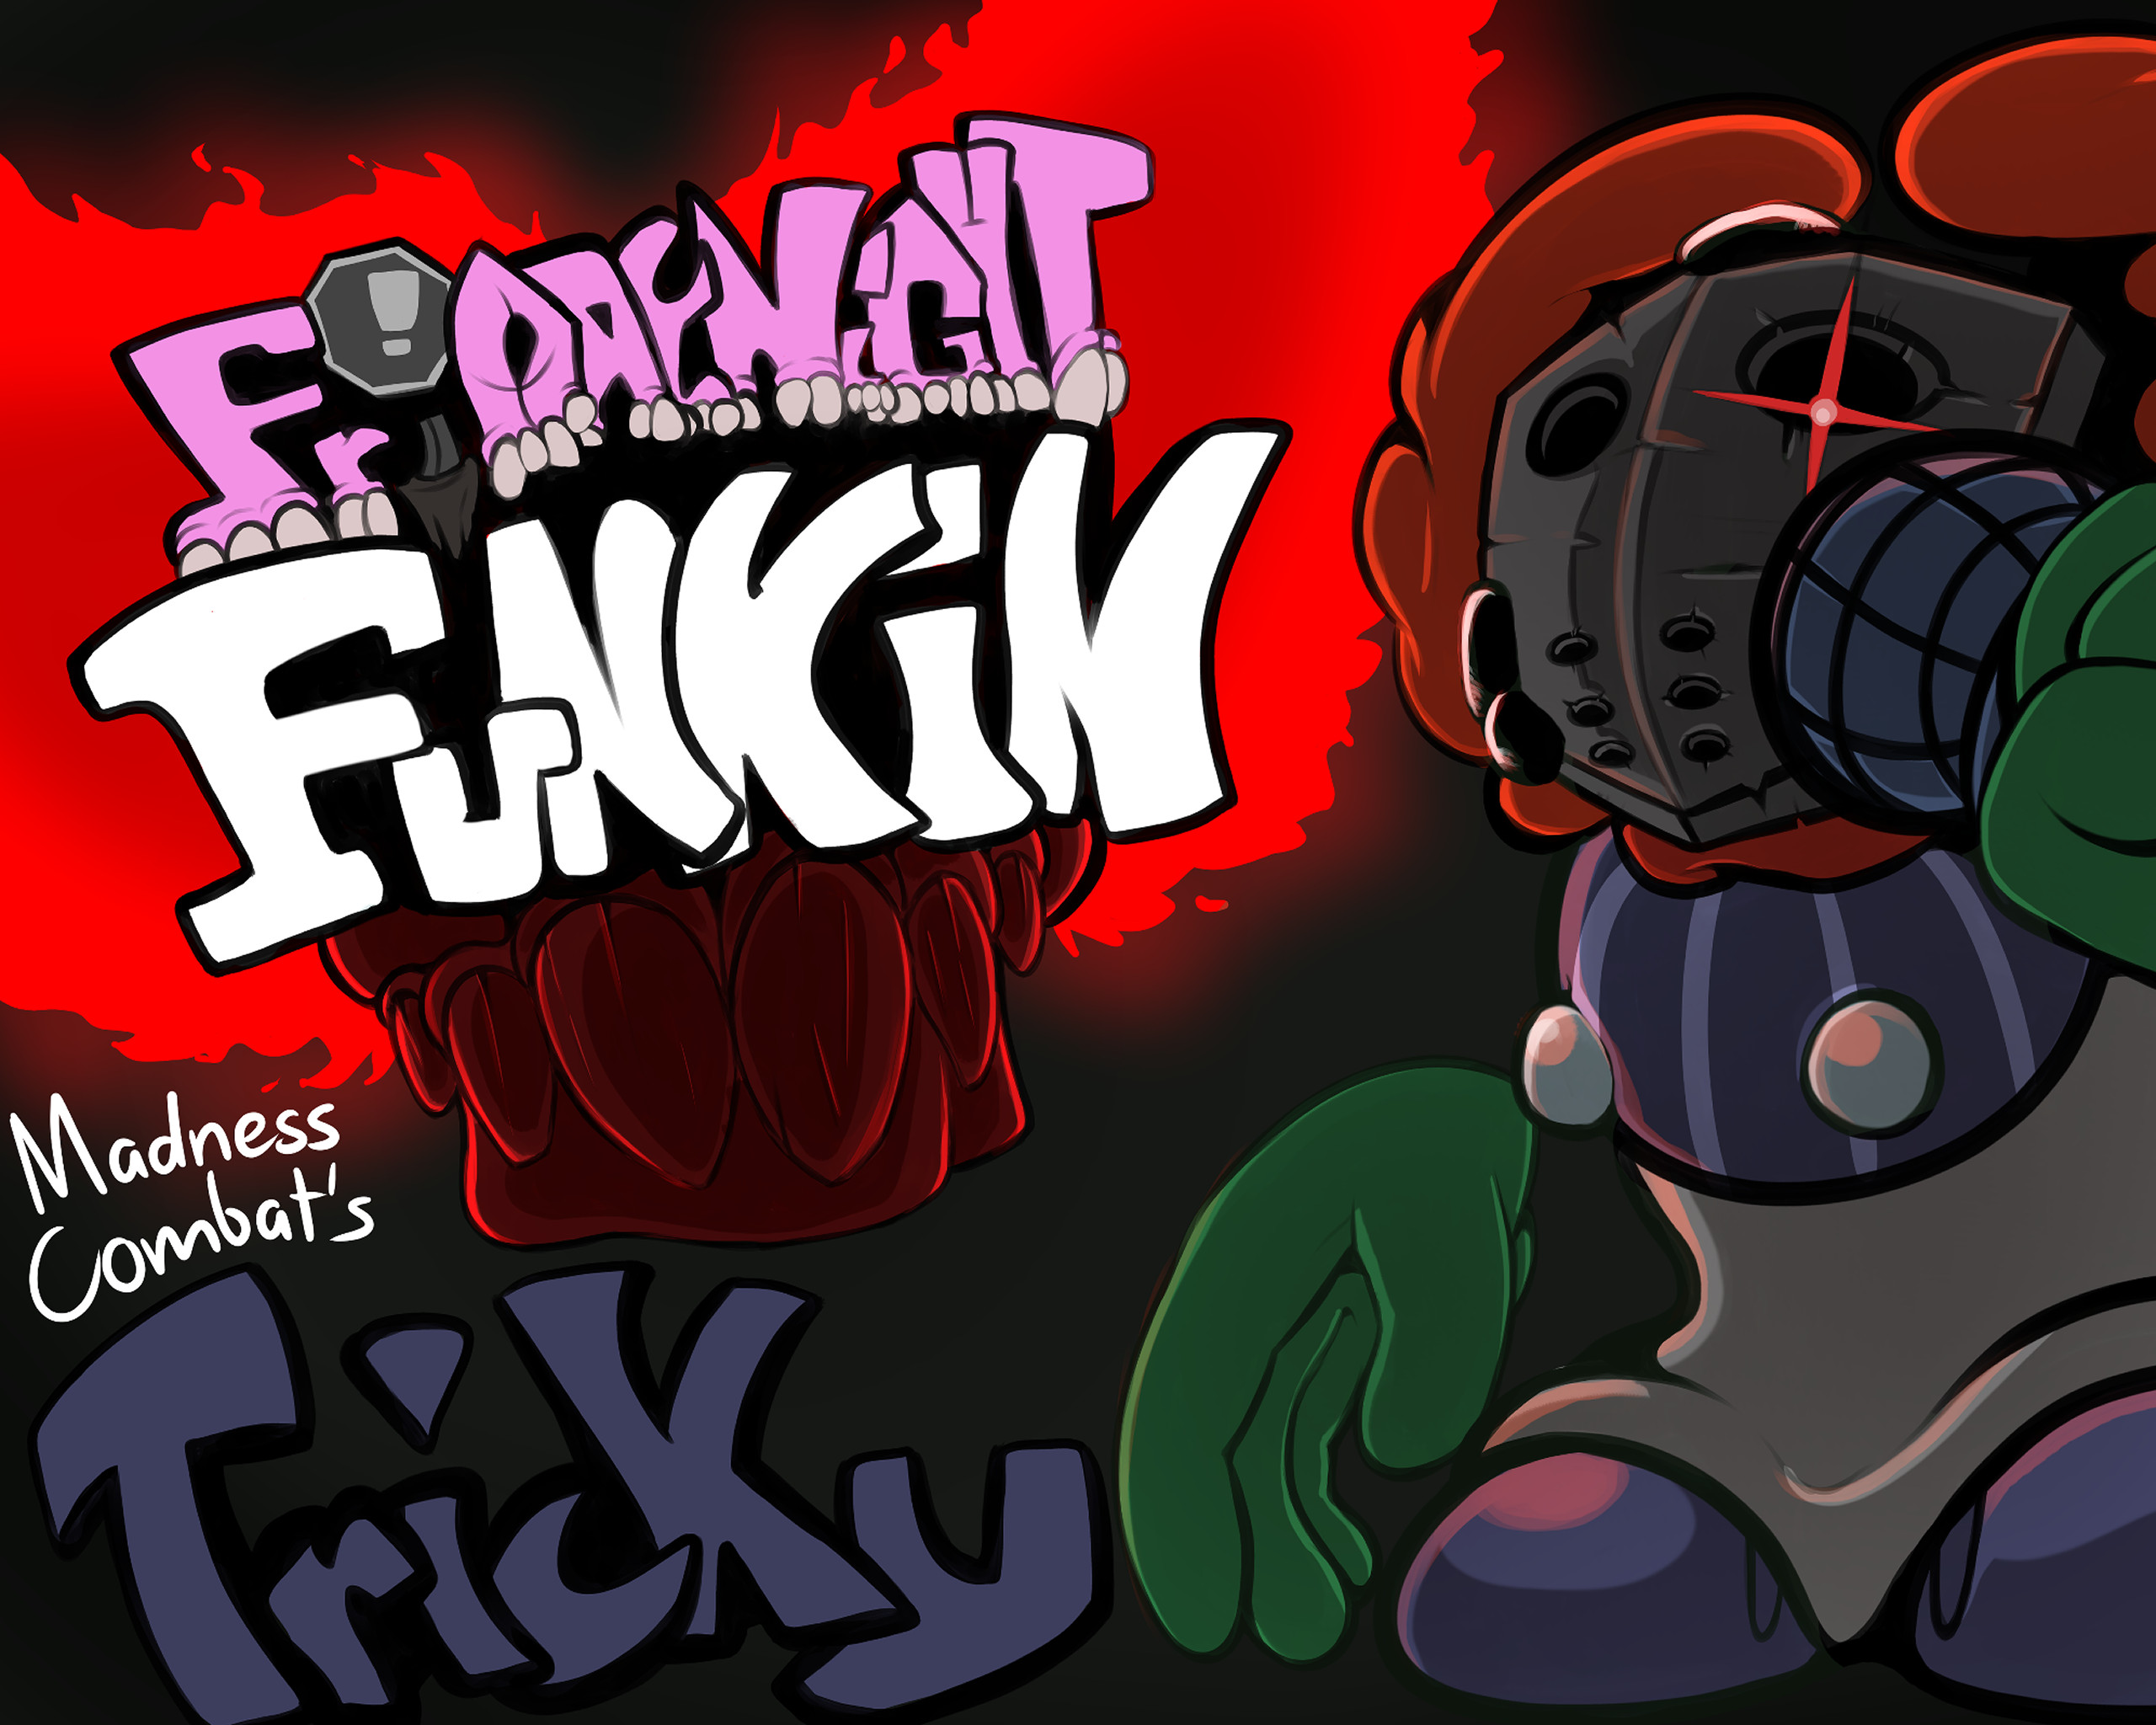 Tricky [Madness Combat] by SpookyMoron on Newgrounds